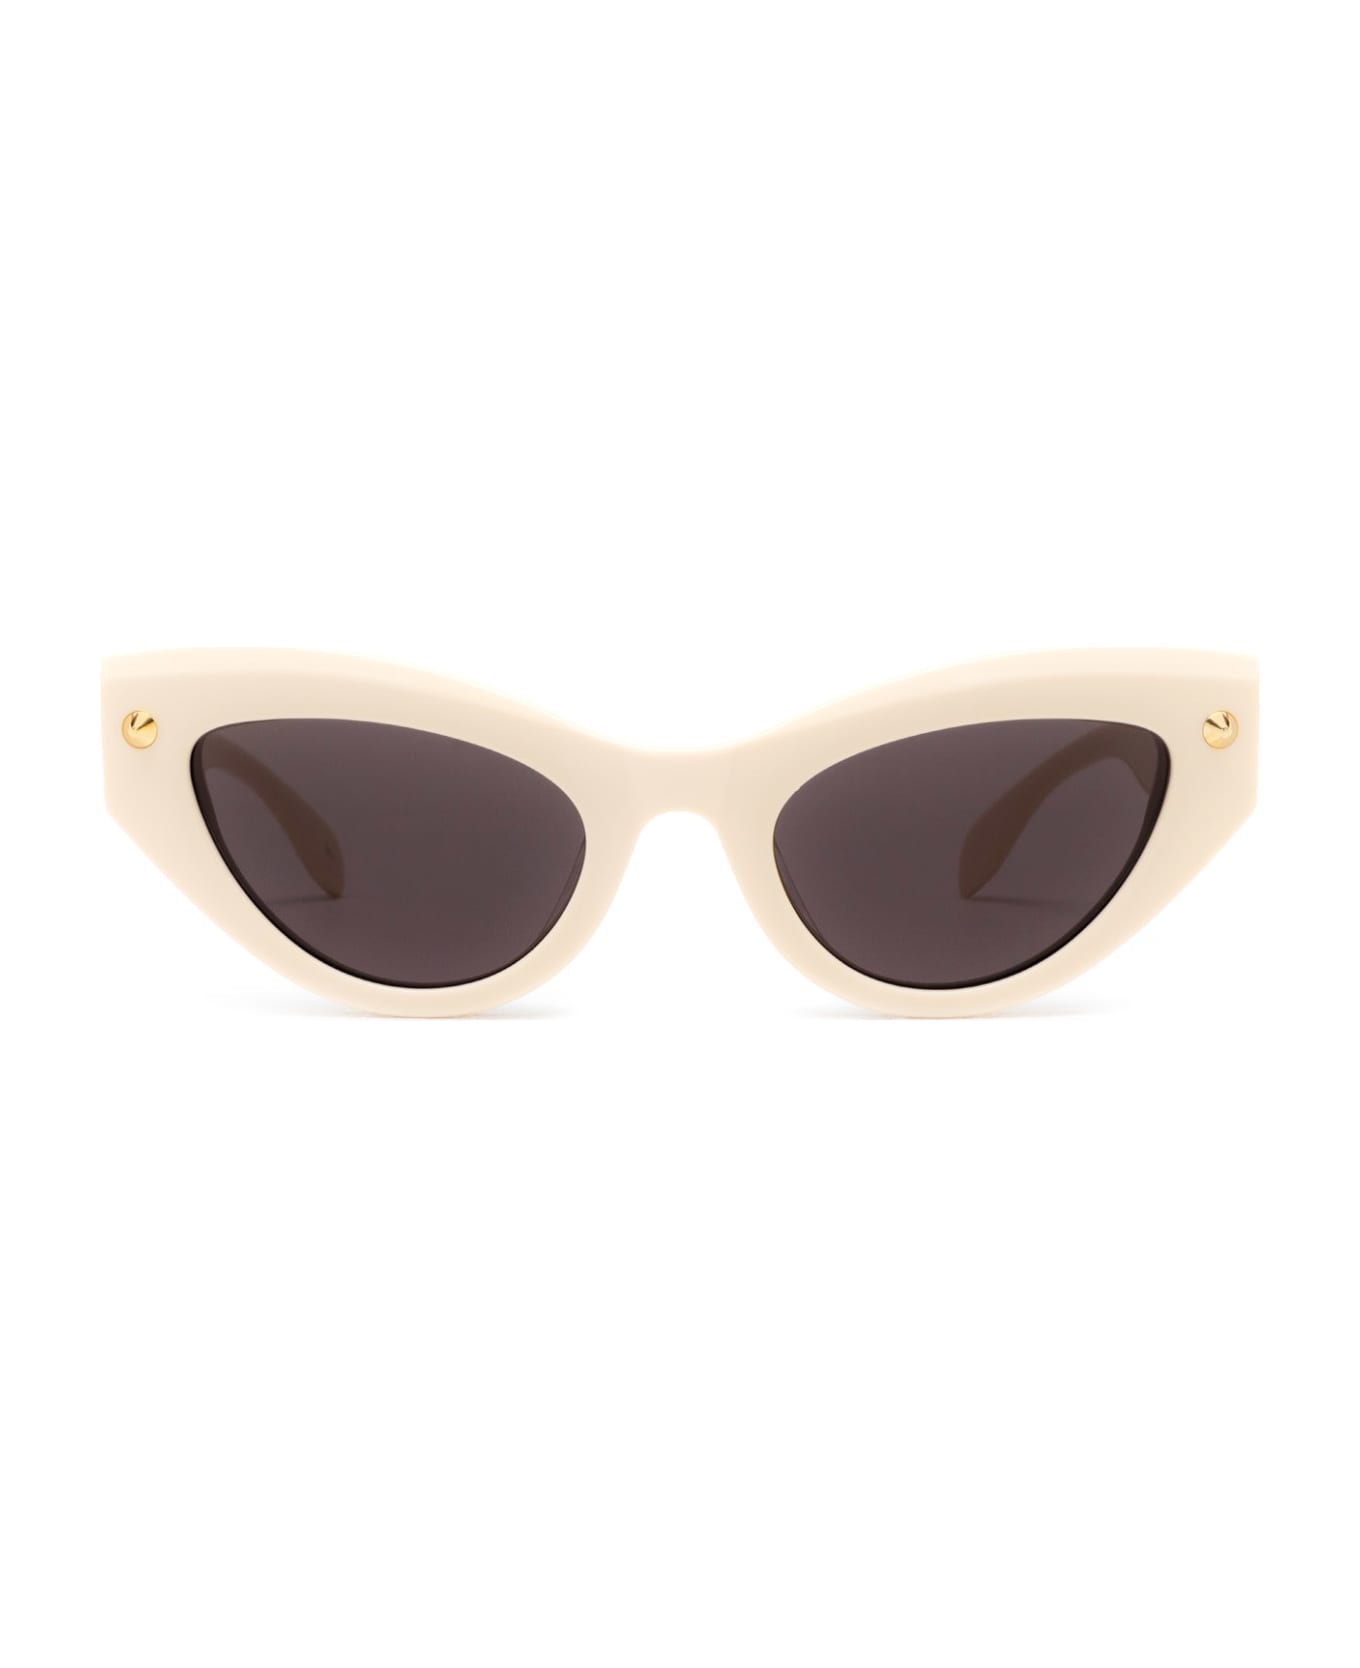 Alexander McQueen Eyewear Am0407s Ivory Sunglasses - Ivory